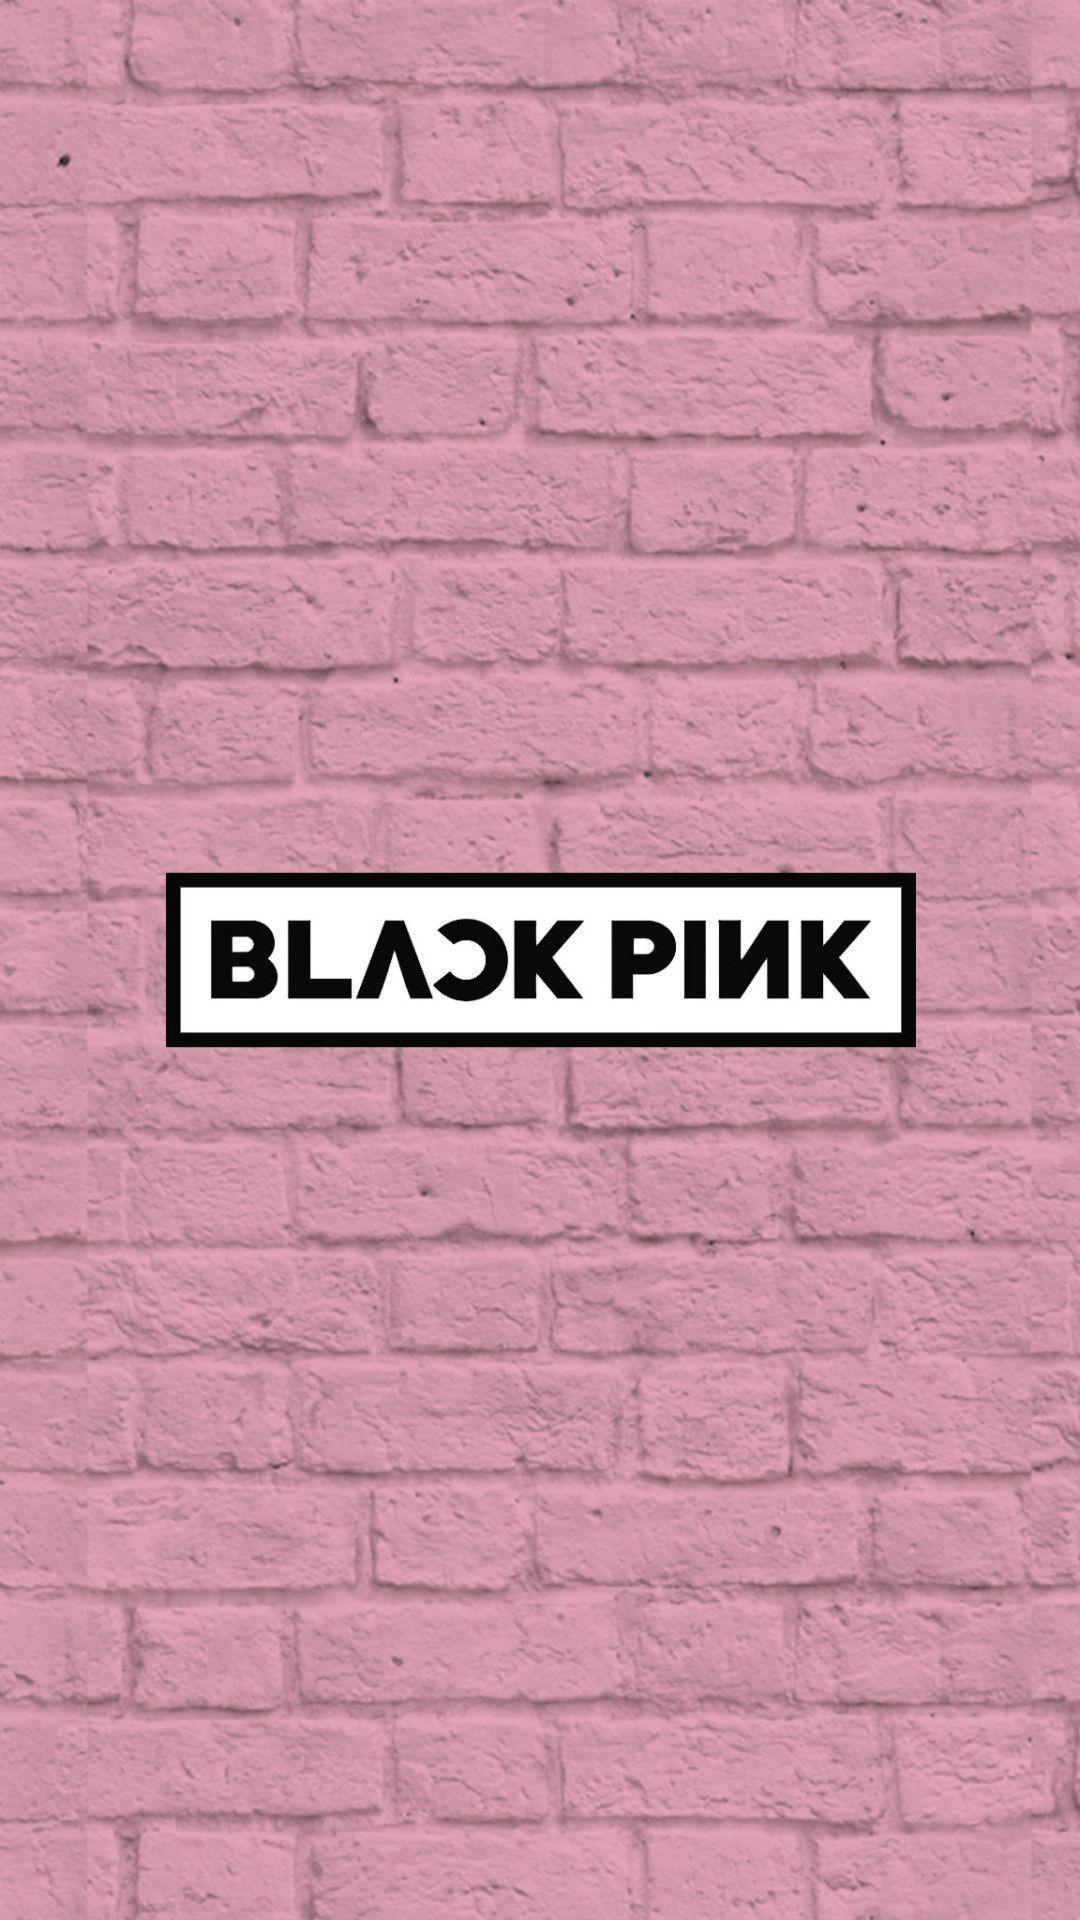 Blackpink Logo Wallpapers - Wallpaper Cave